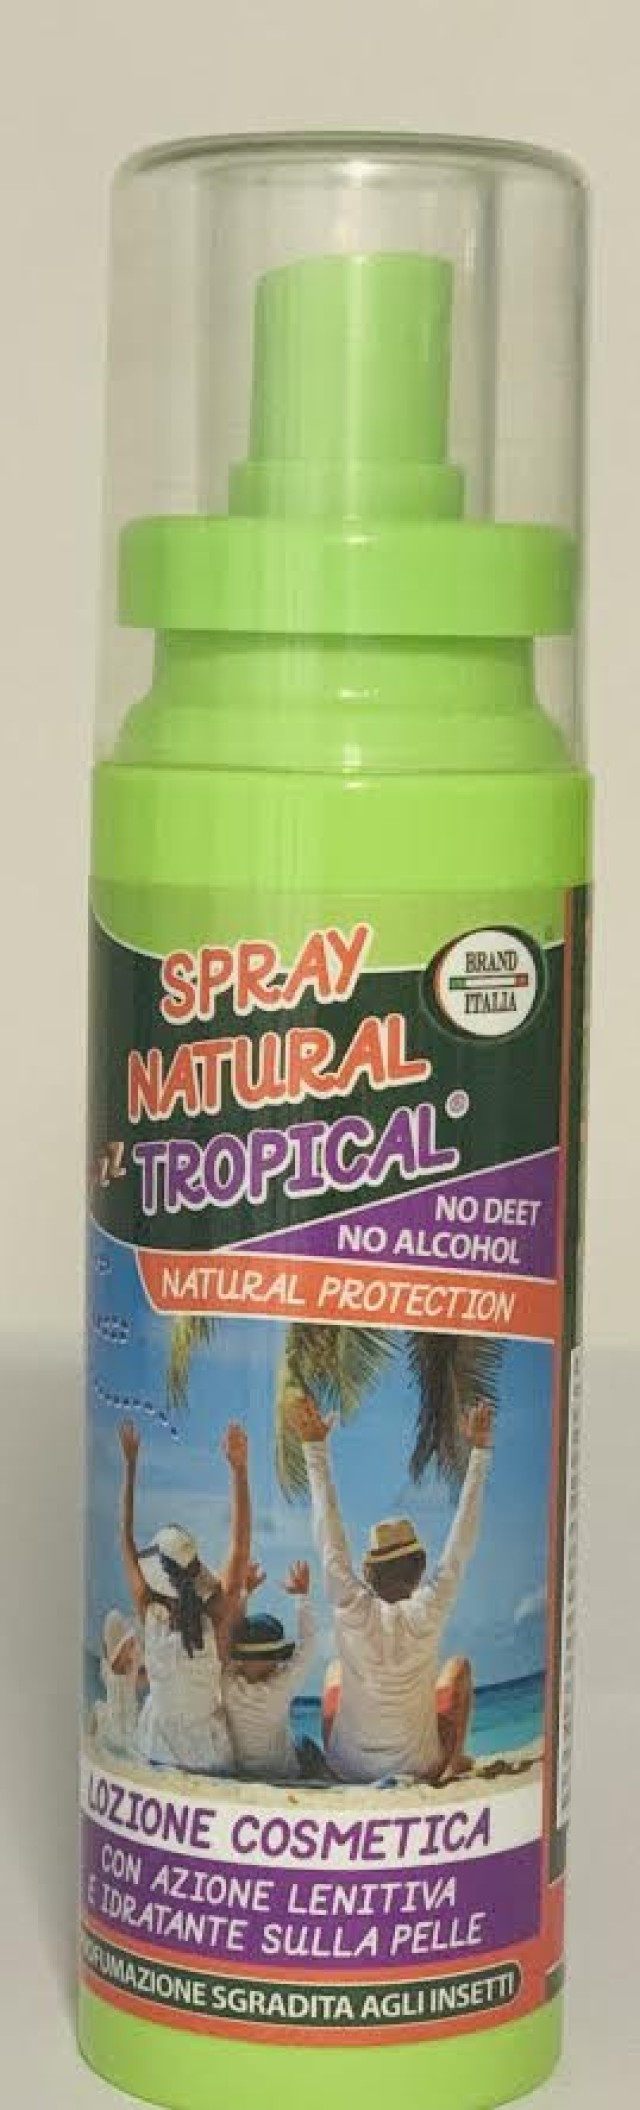 Italia Brand Natural Tropical Spray Αντικουνουπικό Σπρέι 100ml